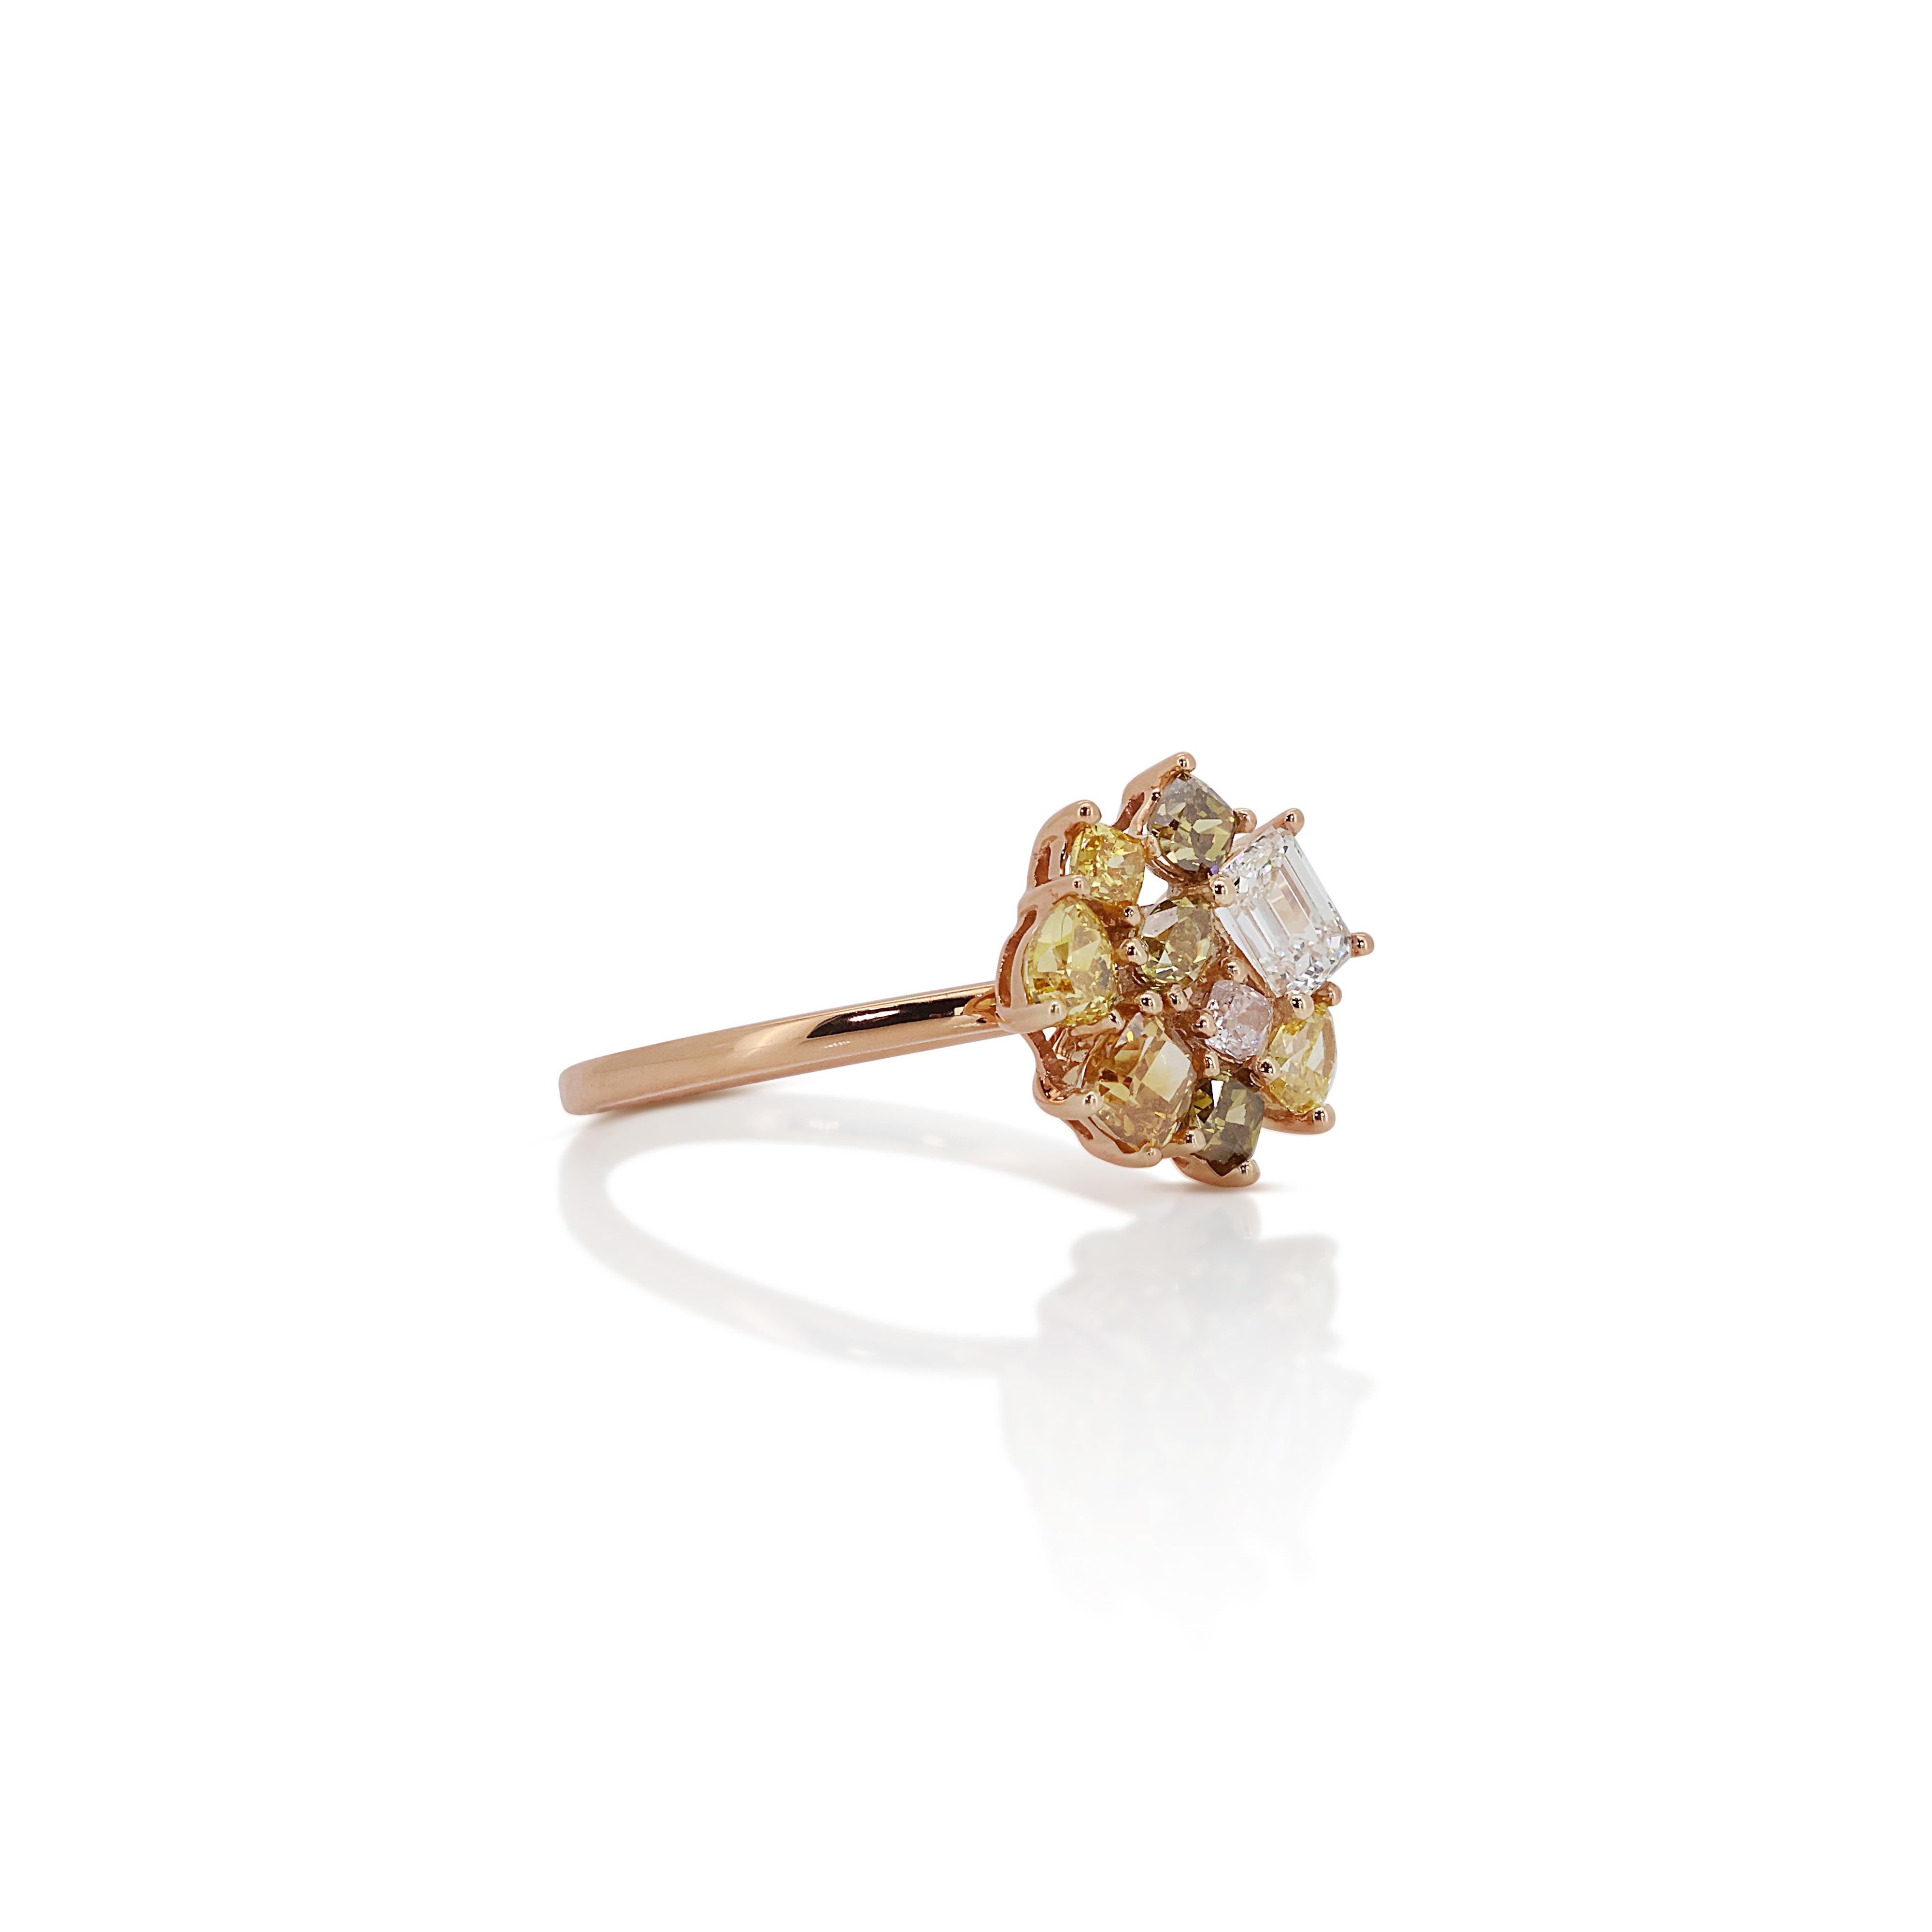 Emerald Cut Elegant 18K Rose Gold Coloured Ring with 1.26 Ct Natural Diamonds, NGI Cert